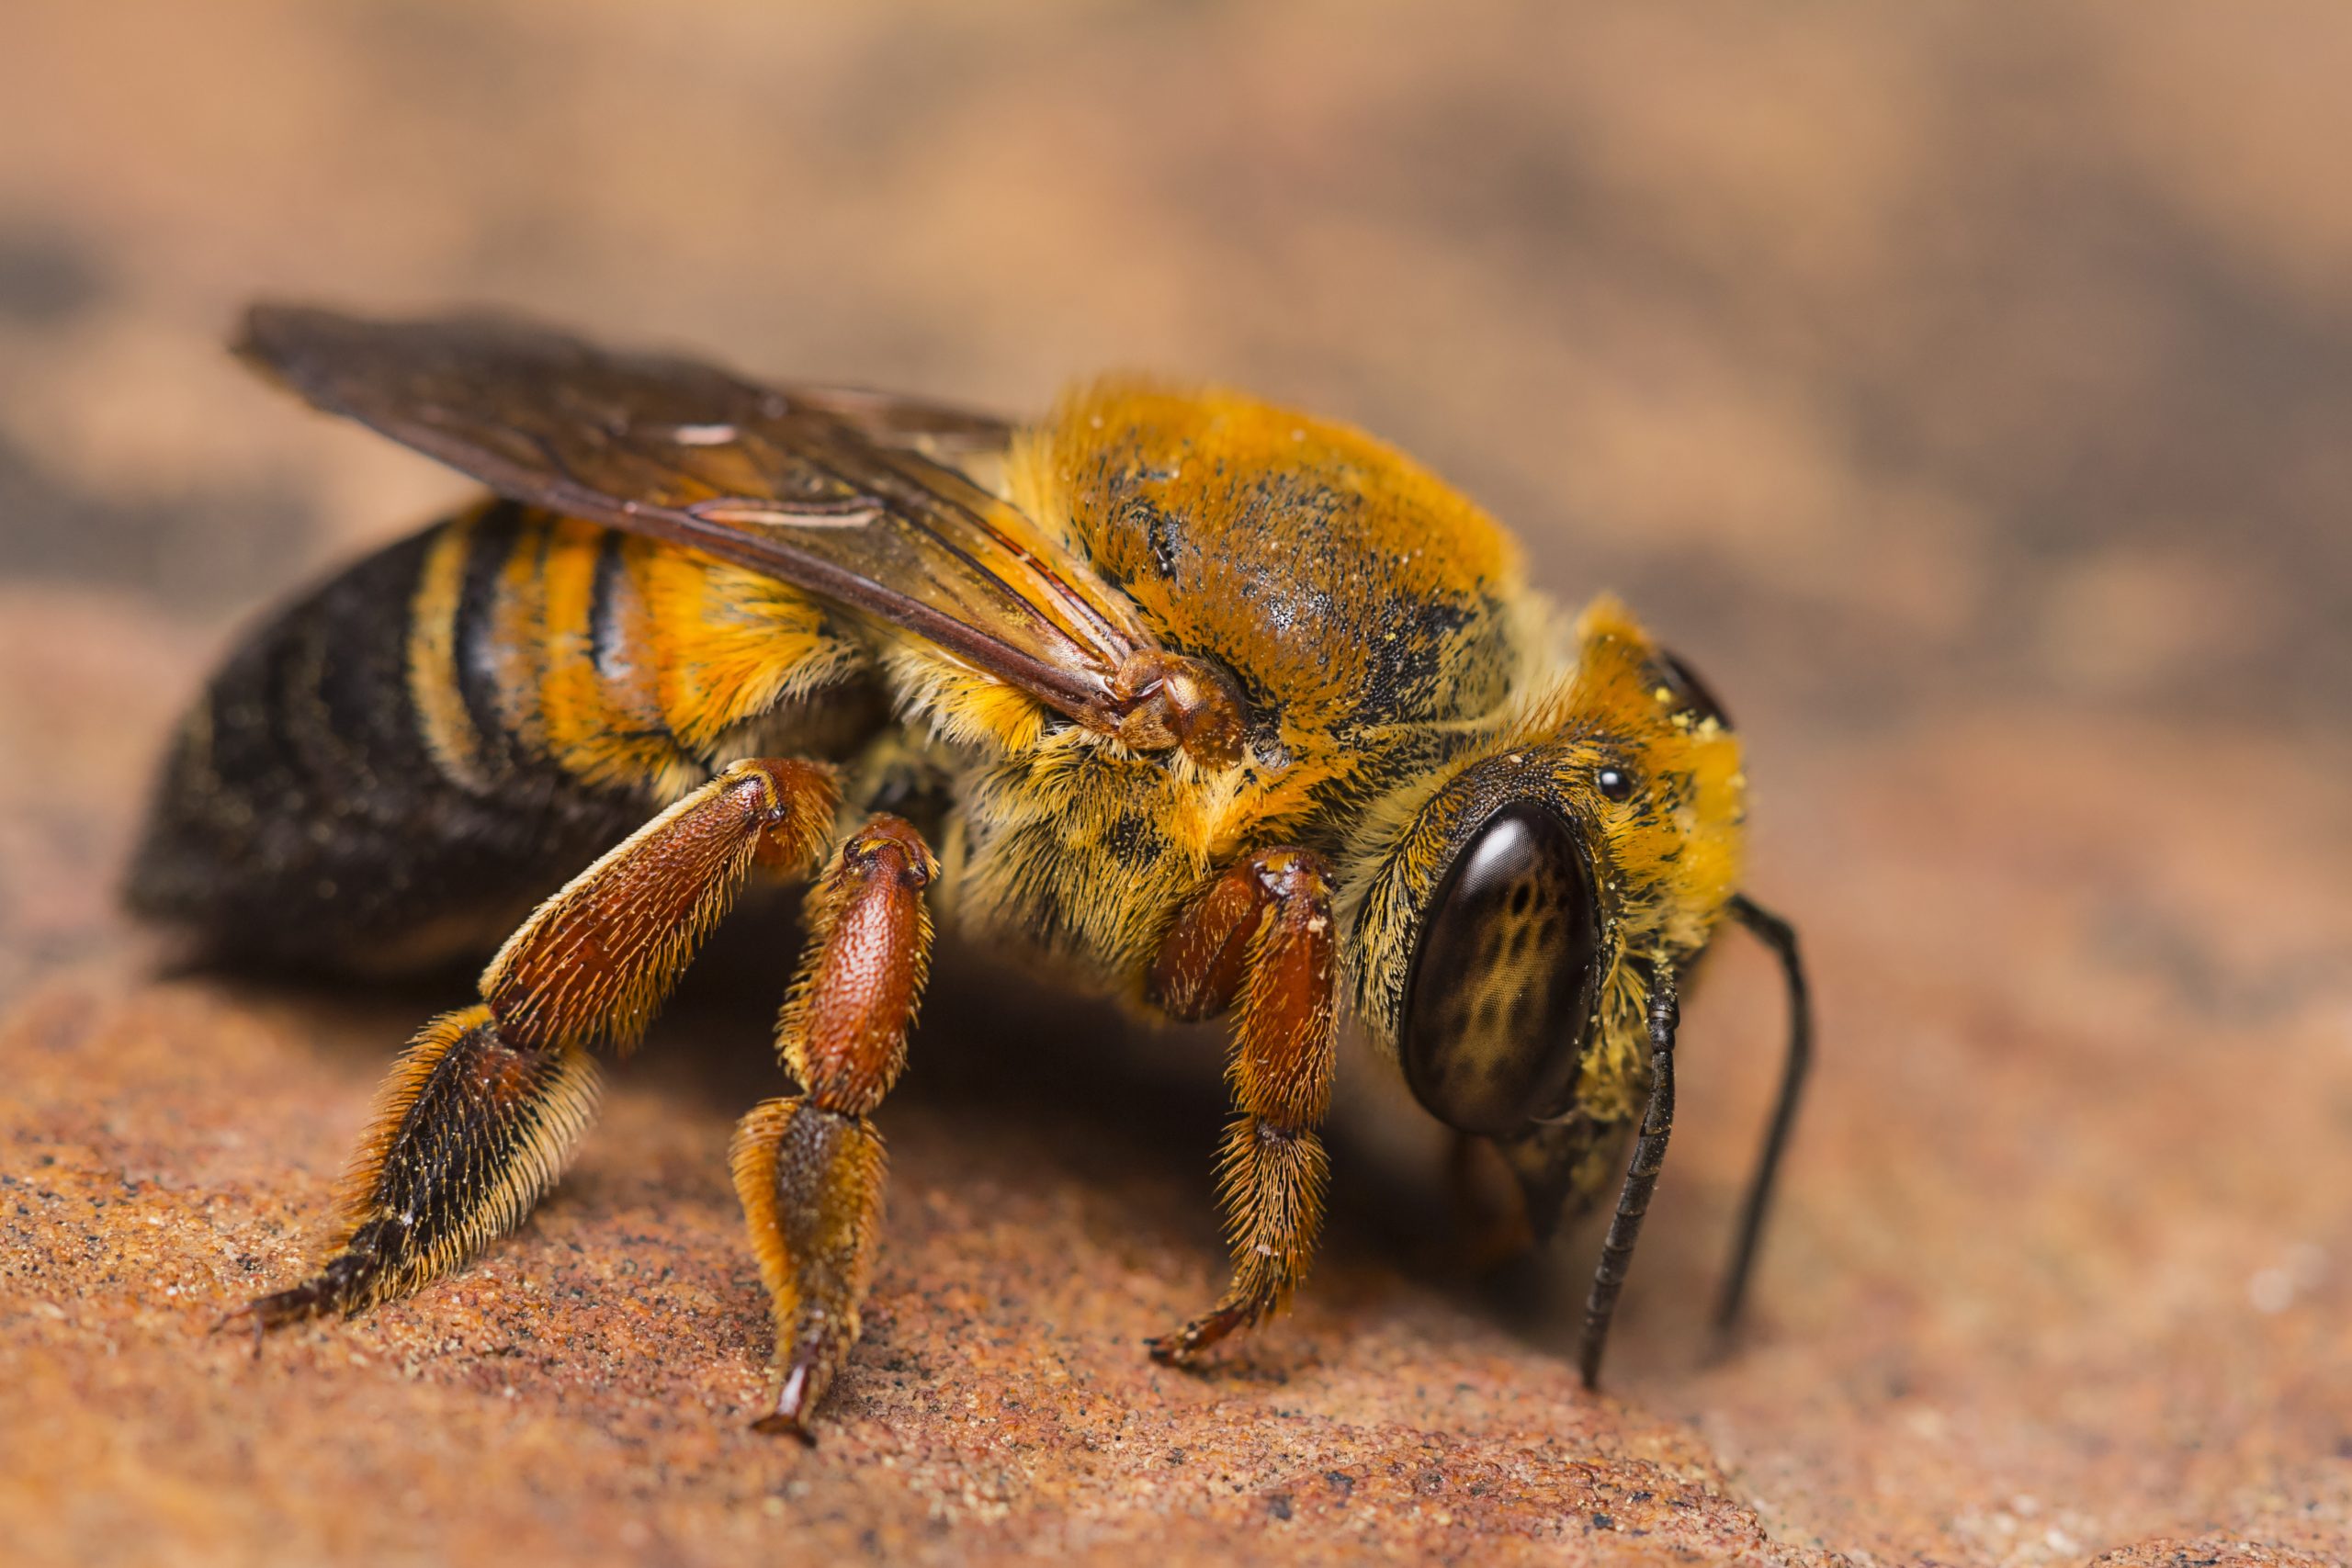 Teenage Honeybee Researcher Takes on Bee Crisis